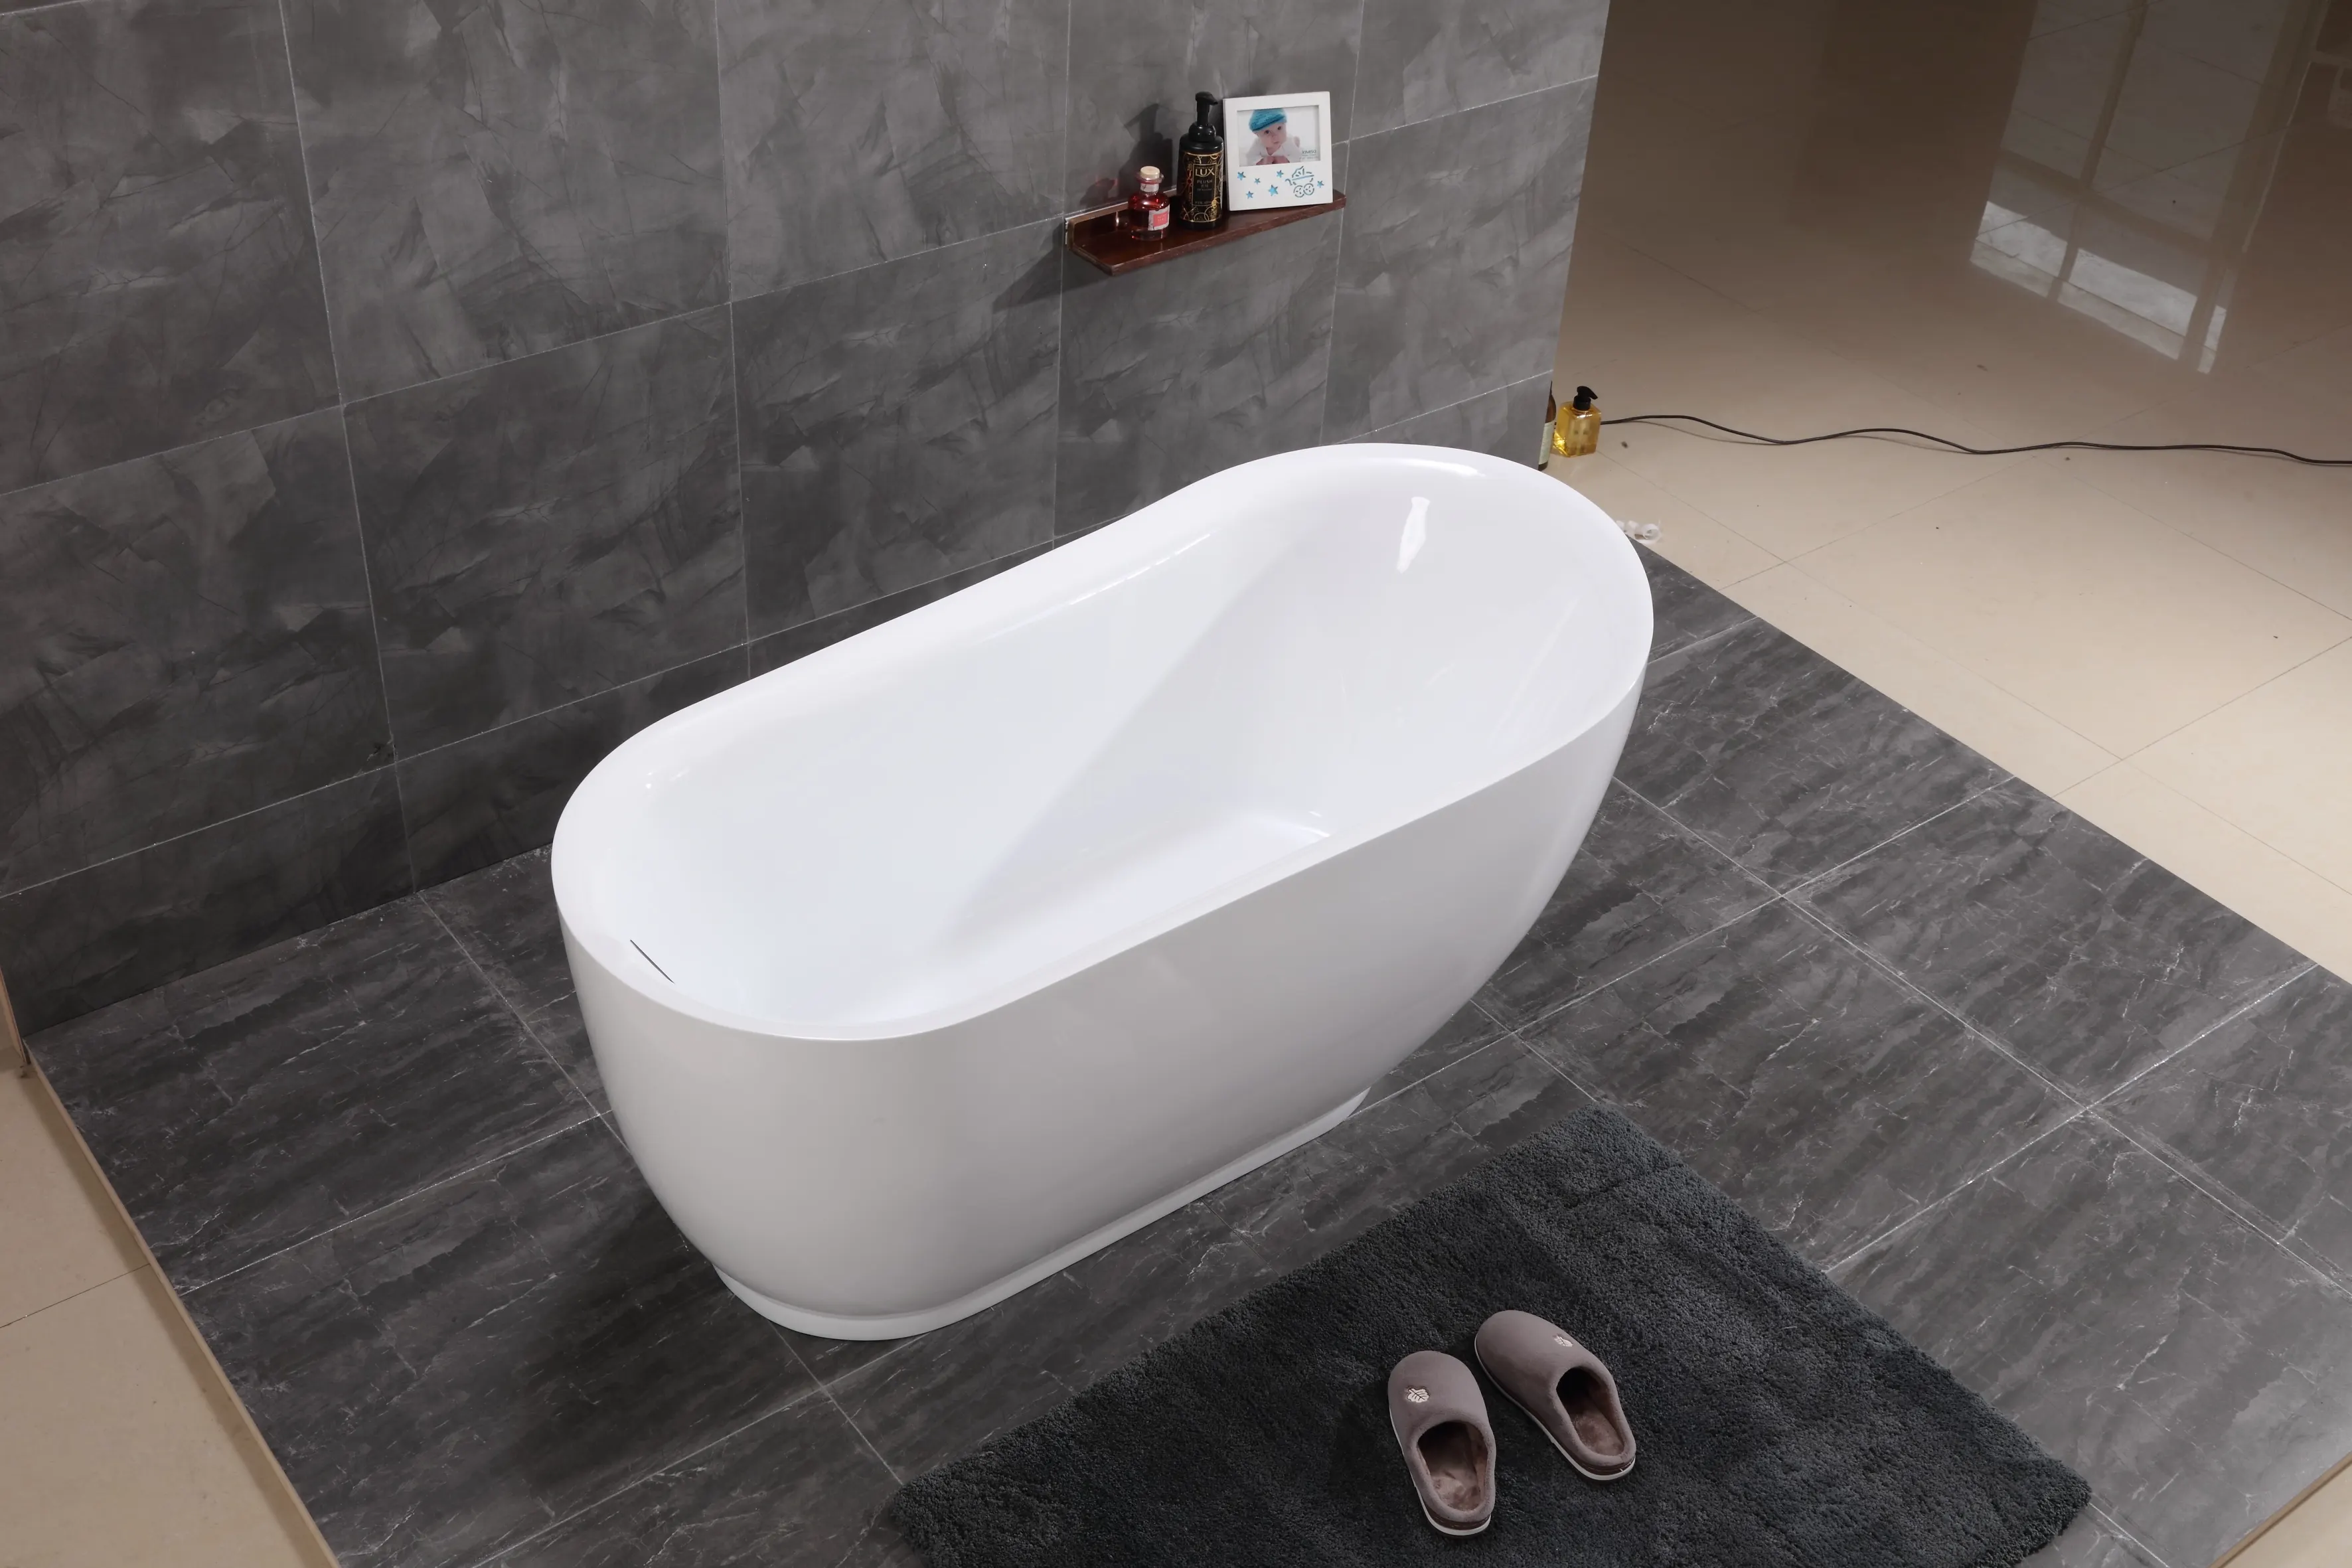 Baignoire de salle de bain autoportante Baignoire spa en acrylique Baignoire sans couture Baignoire design ergonomique